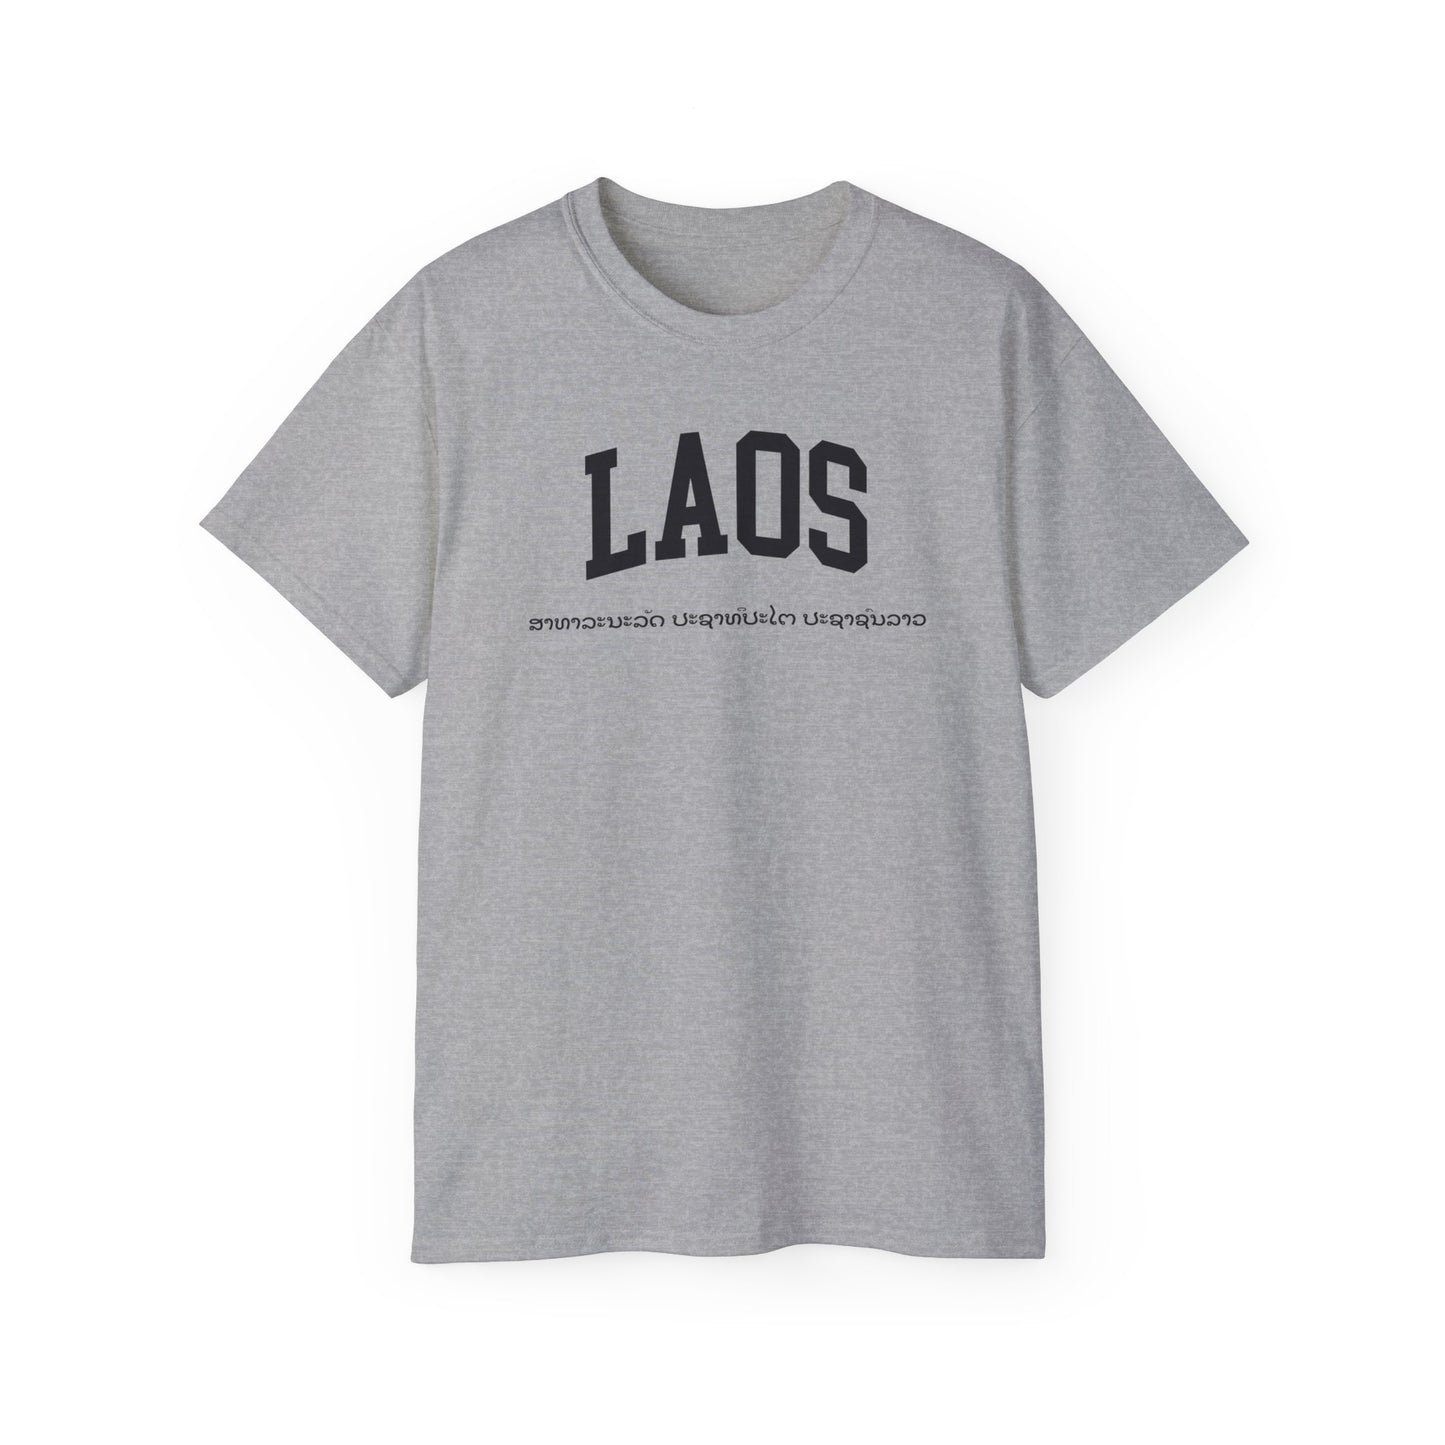 Laos Tee